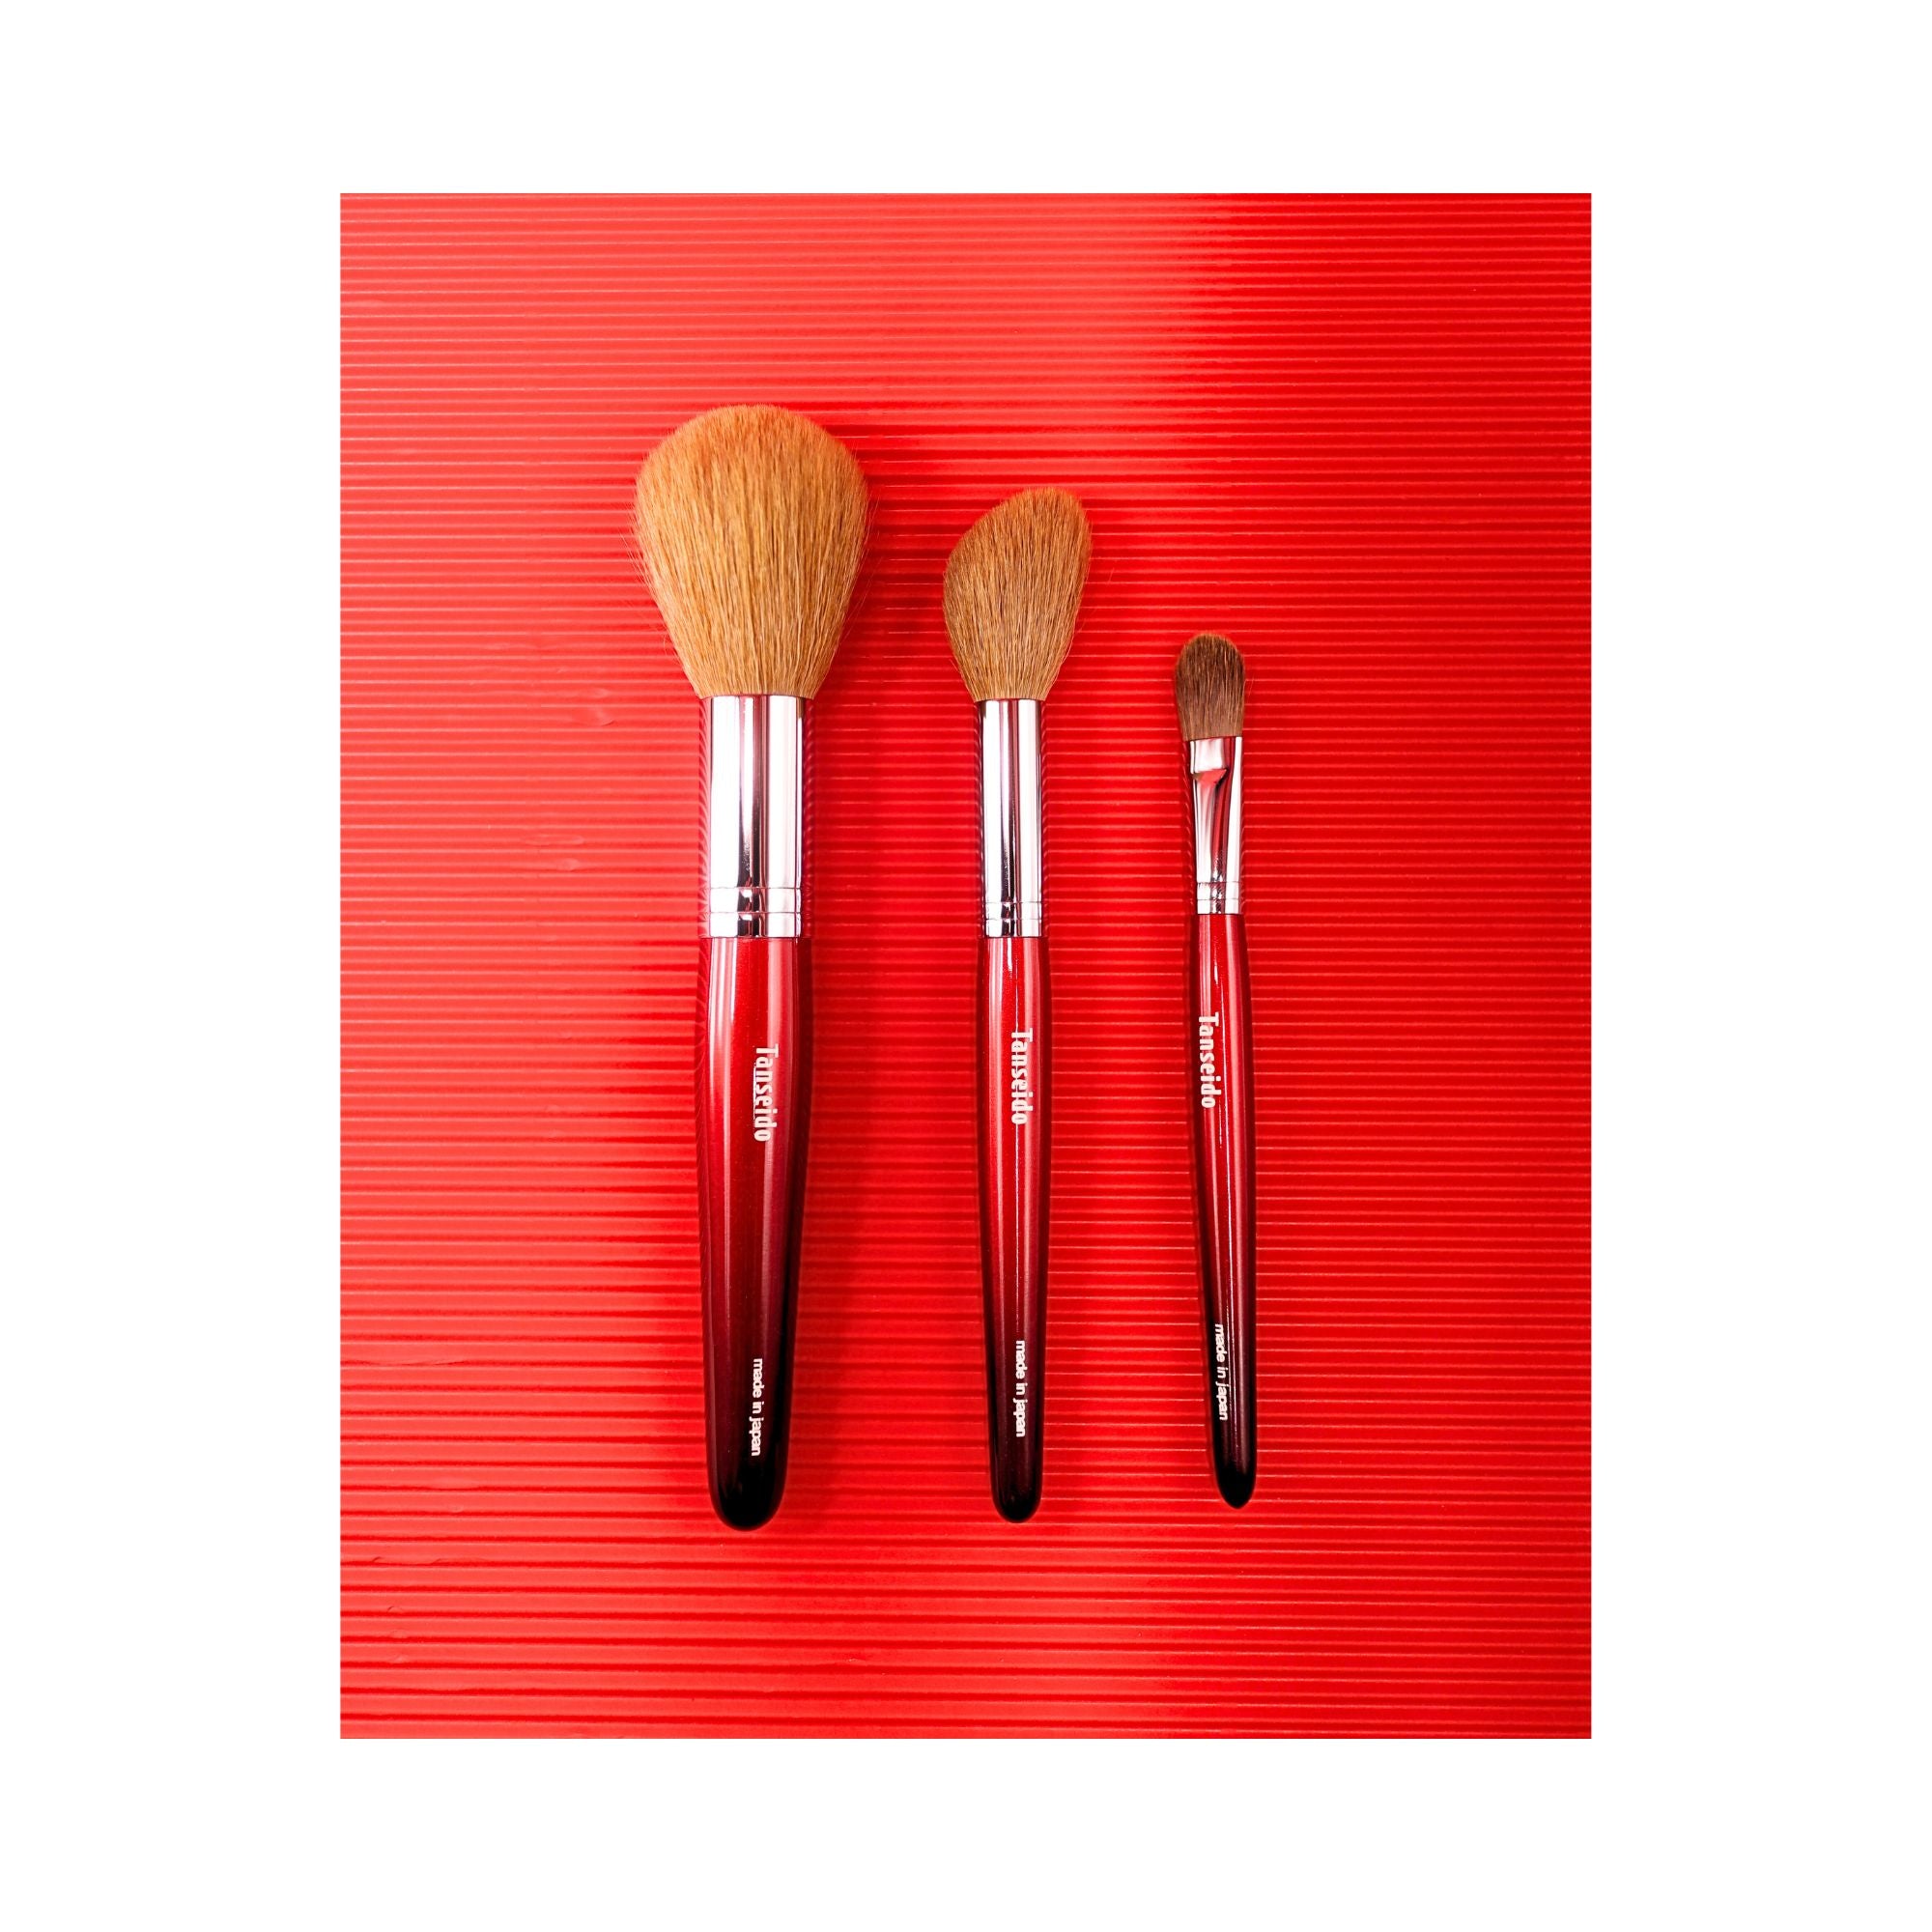 Tanseido AKA 赤 Series WS14T Highlight Brush (Regular Collection) - Fude Beauty, Japanese Makeup Brushes